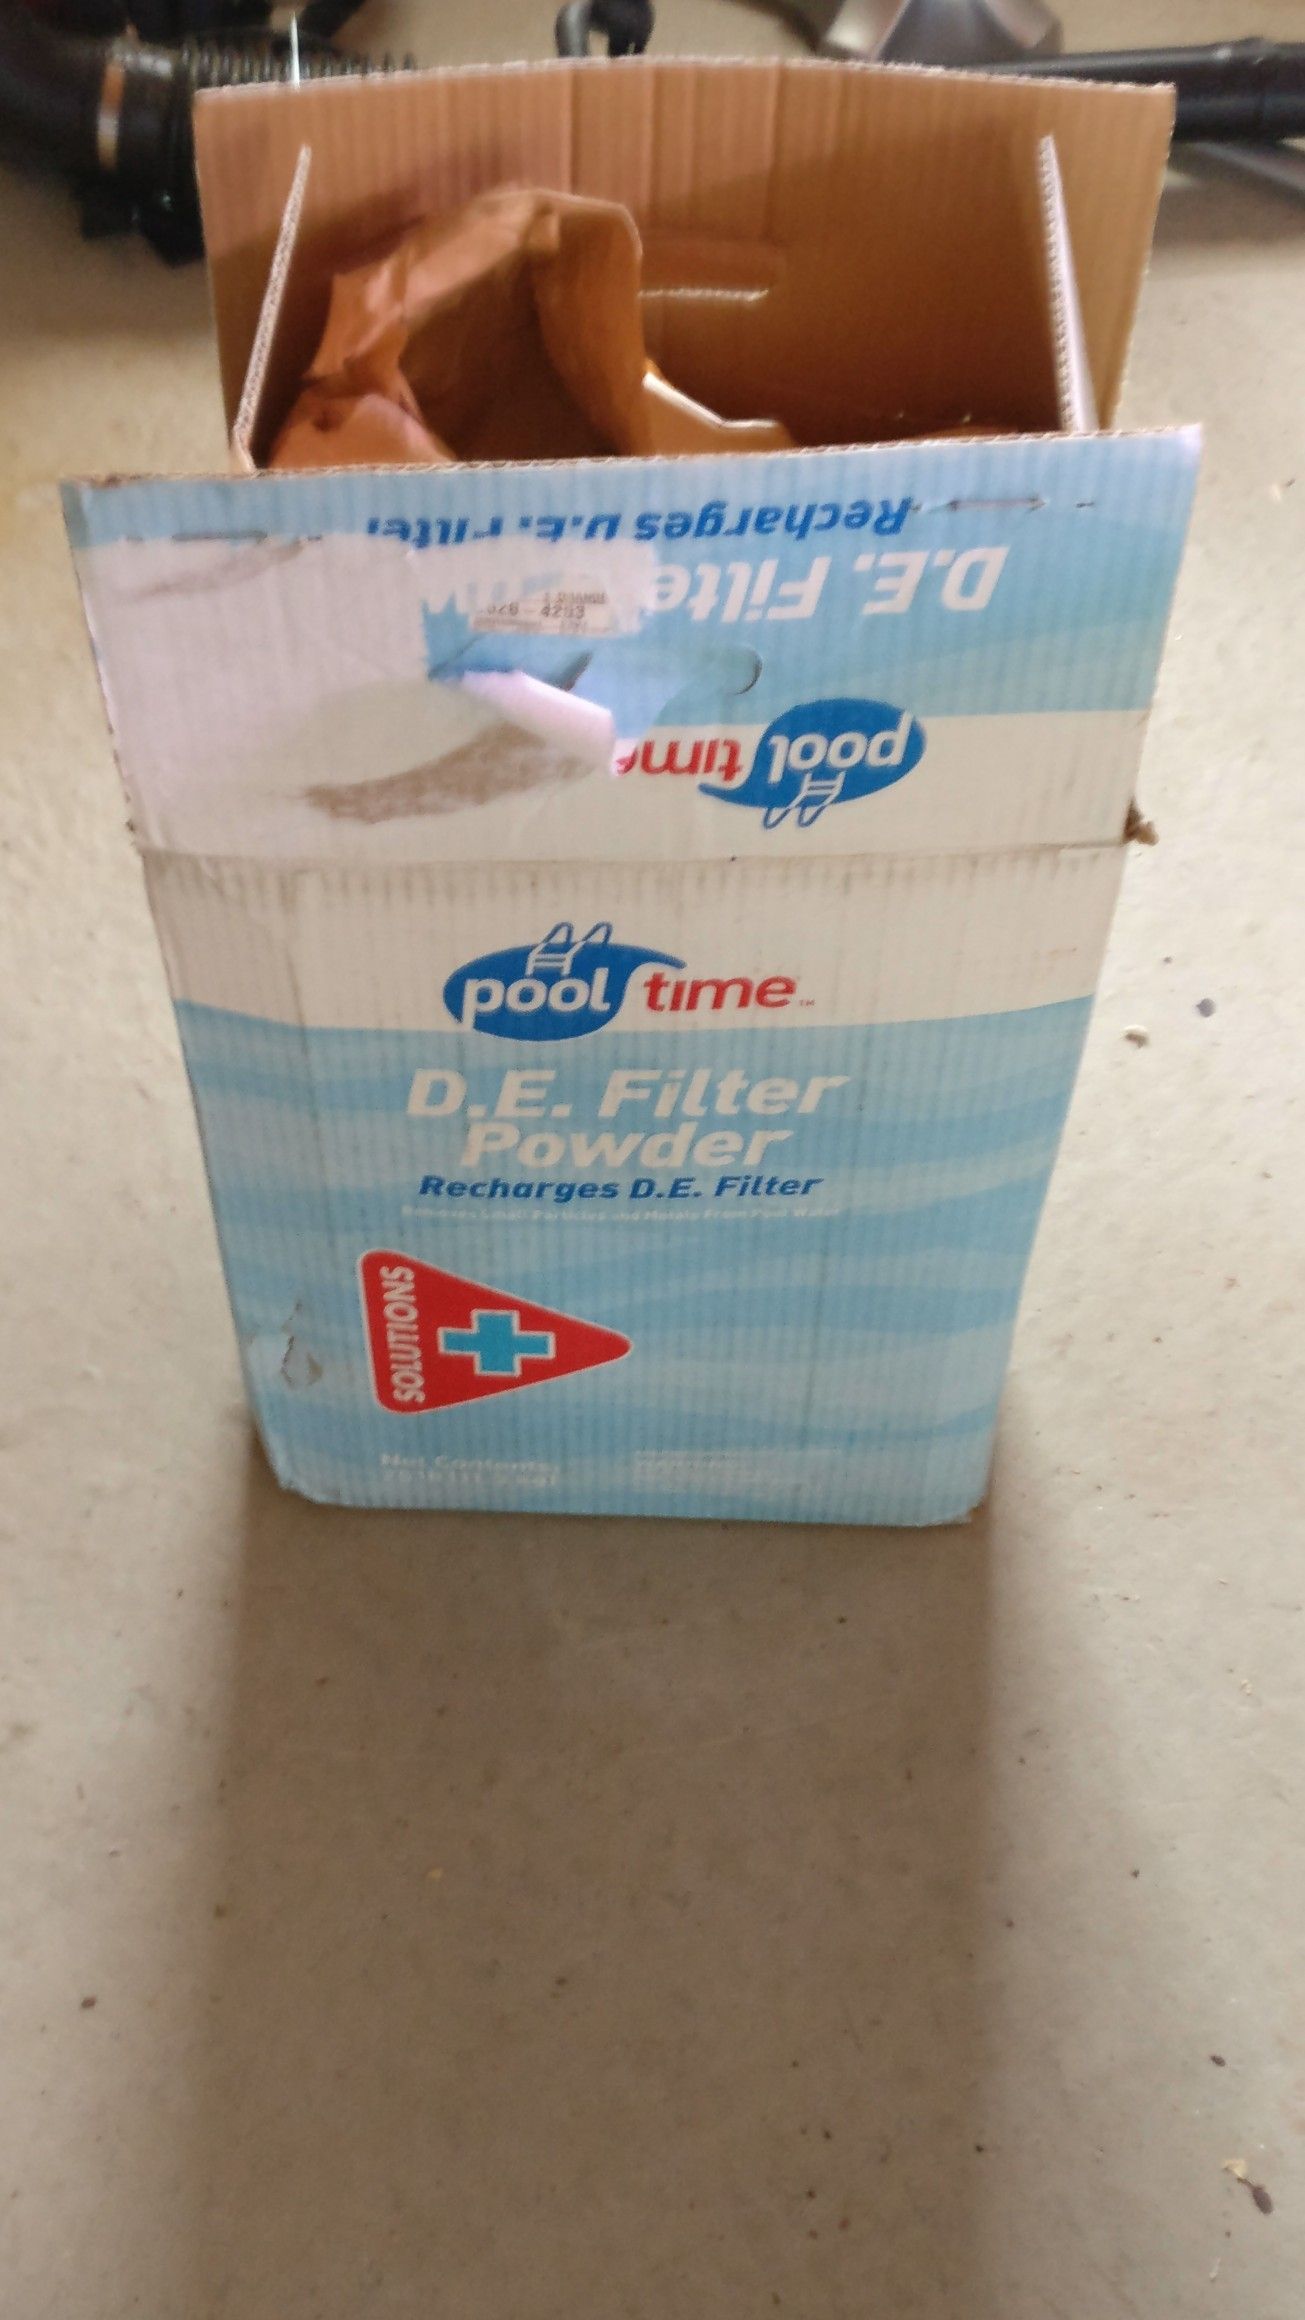 DE filter powder for pool 20+ lbs